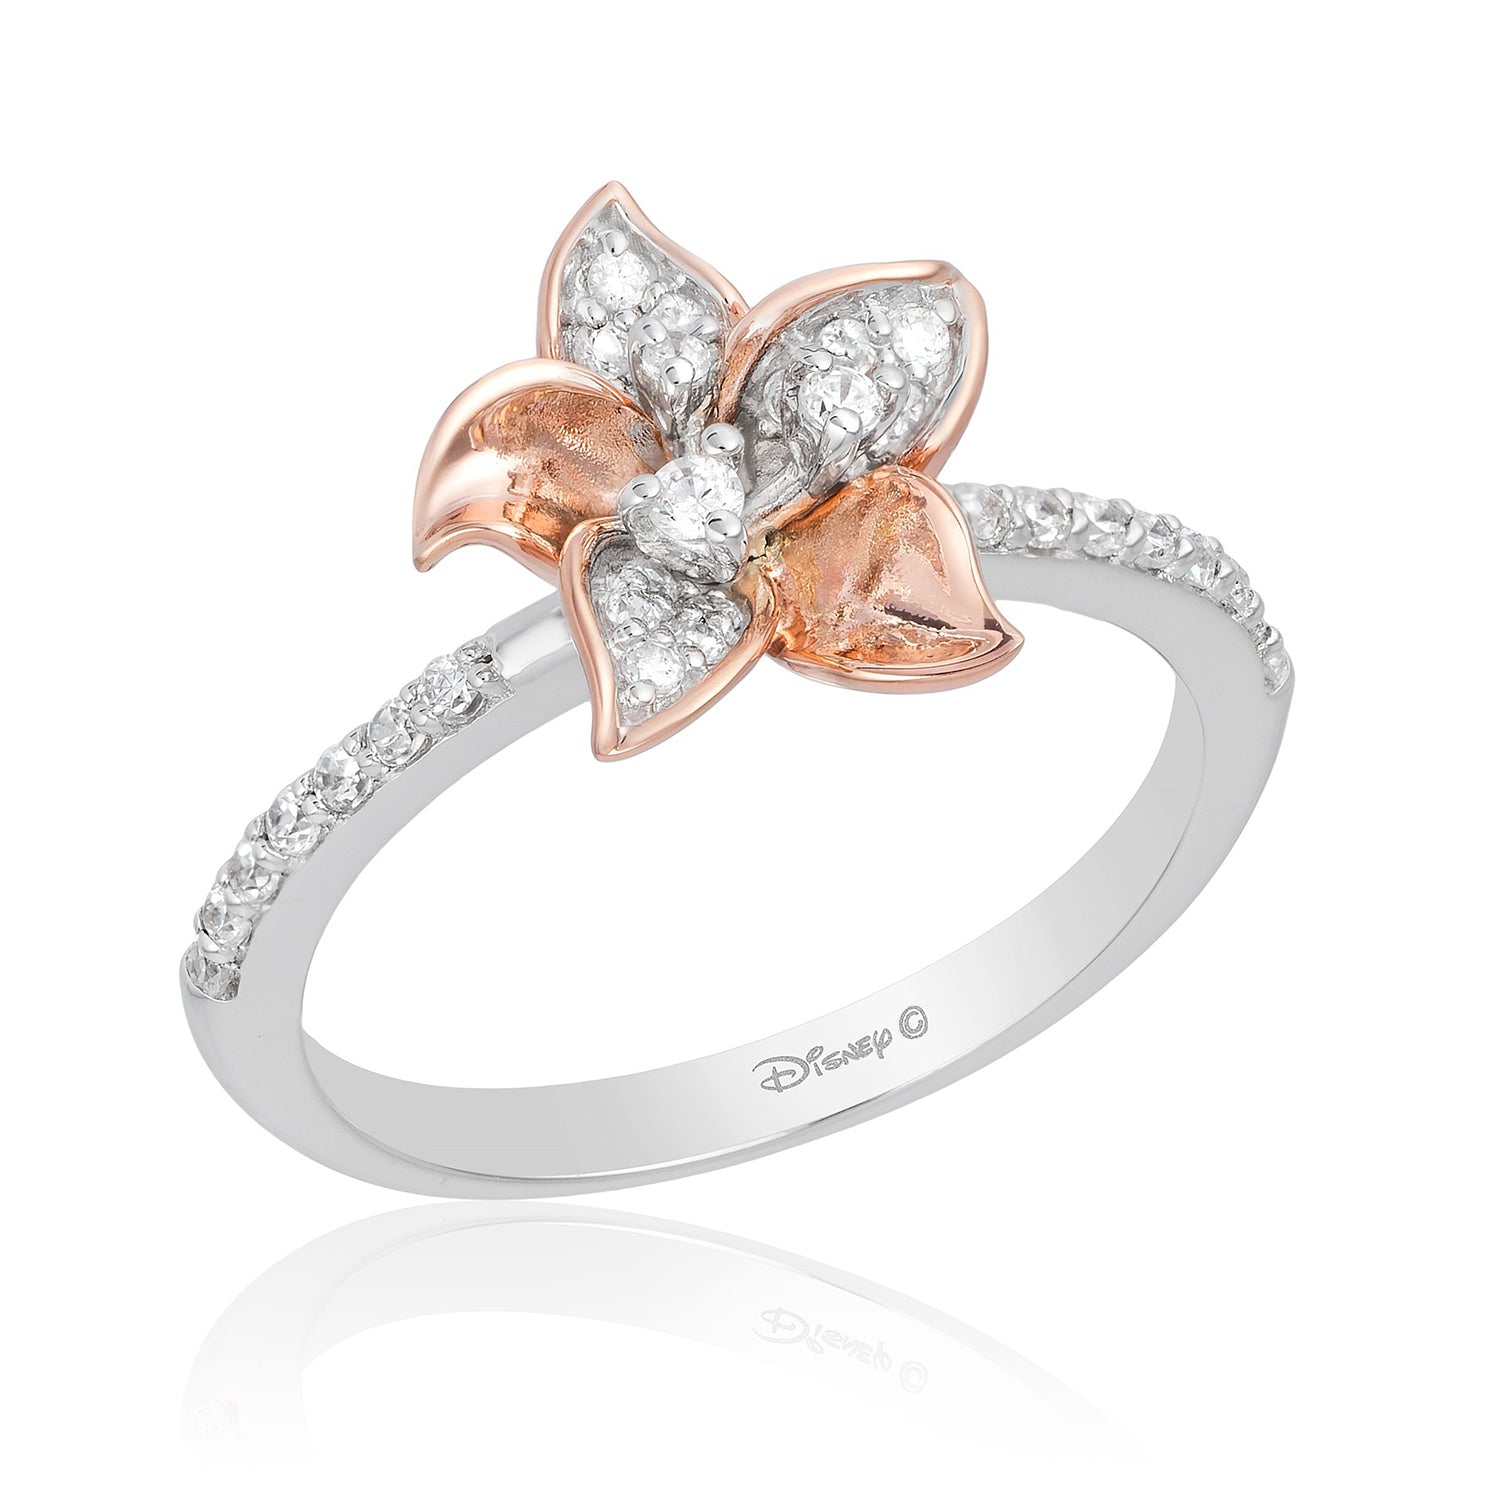  Jewelili Enchanted Disney Fine Jewelry 14K Rose Gold